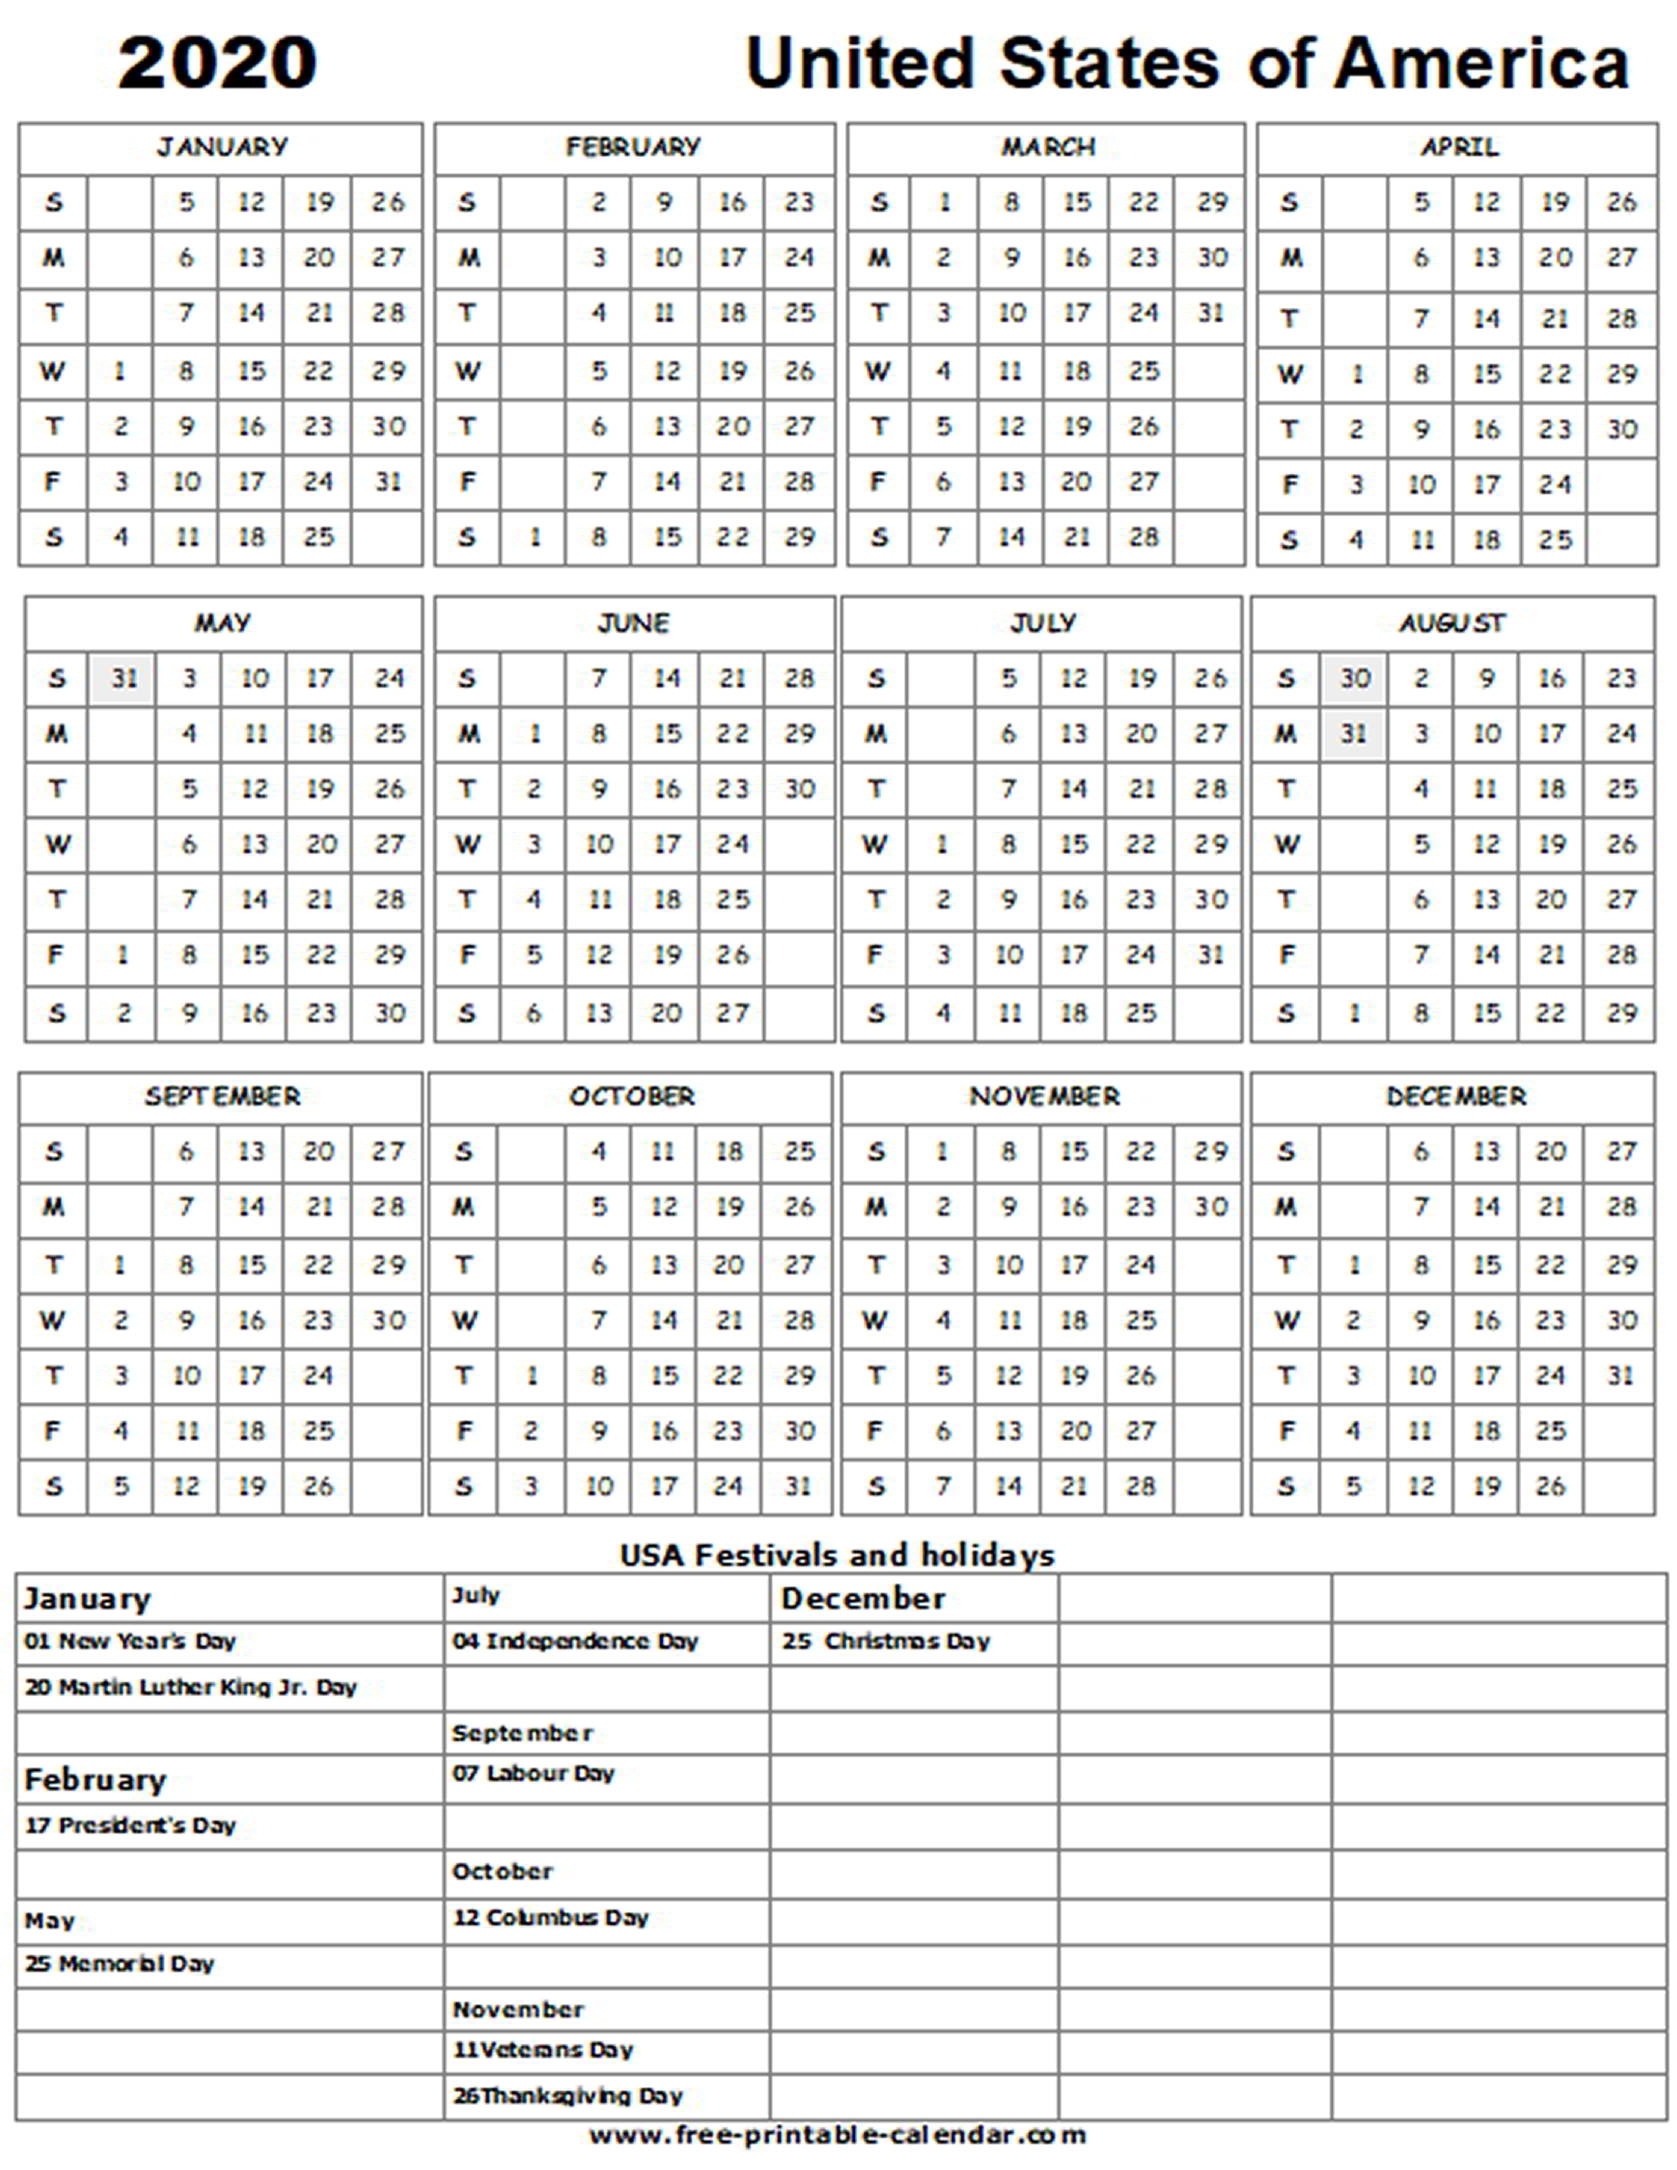 2020 Us Holiday Calendar - Free-Printable-Calendar Free Printable Chrsitmas Calendar 2020